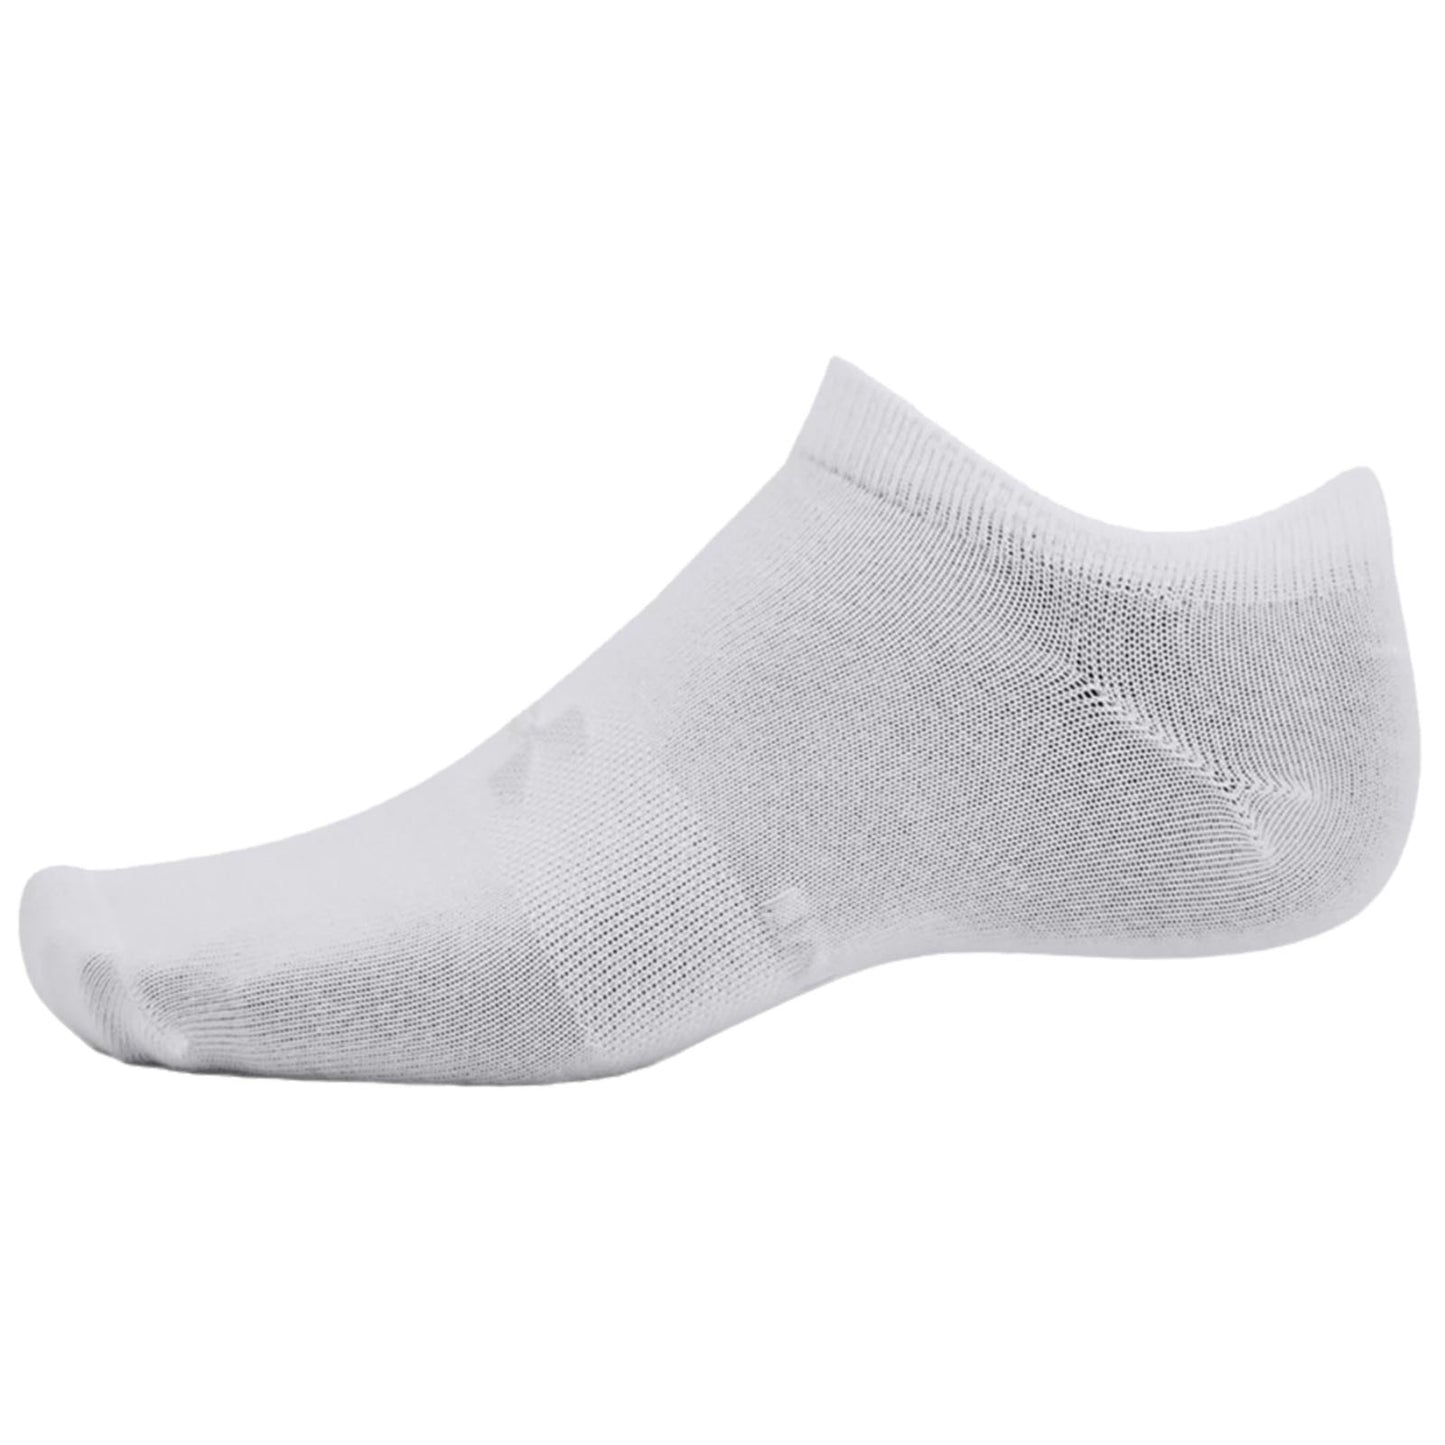 Under Armour Unisex Essential No-Show Socks (6 Pairs)